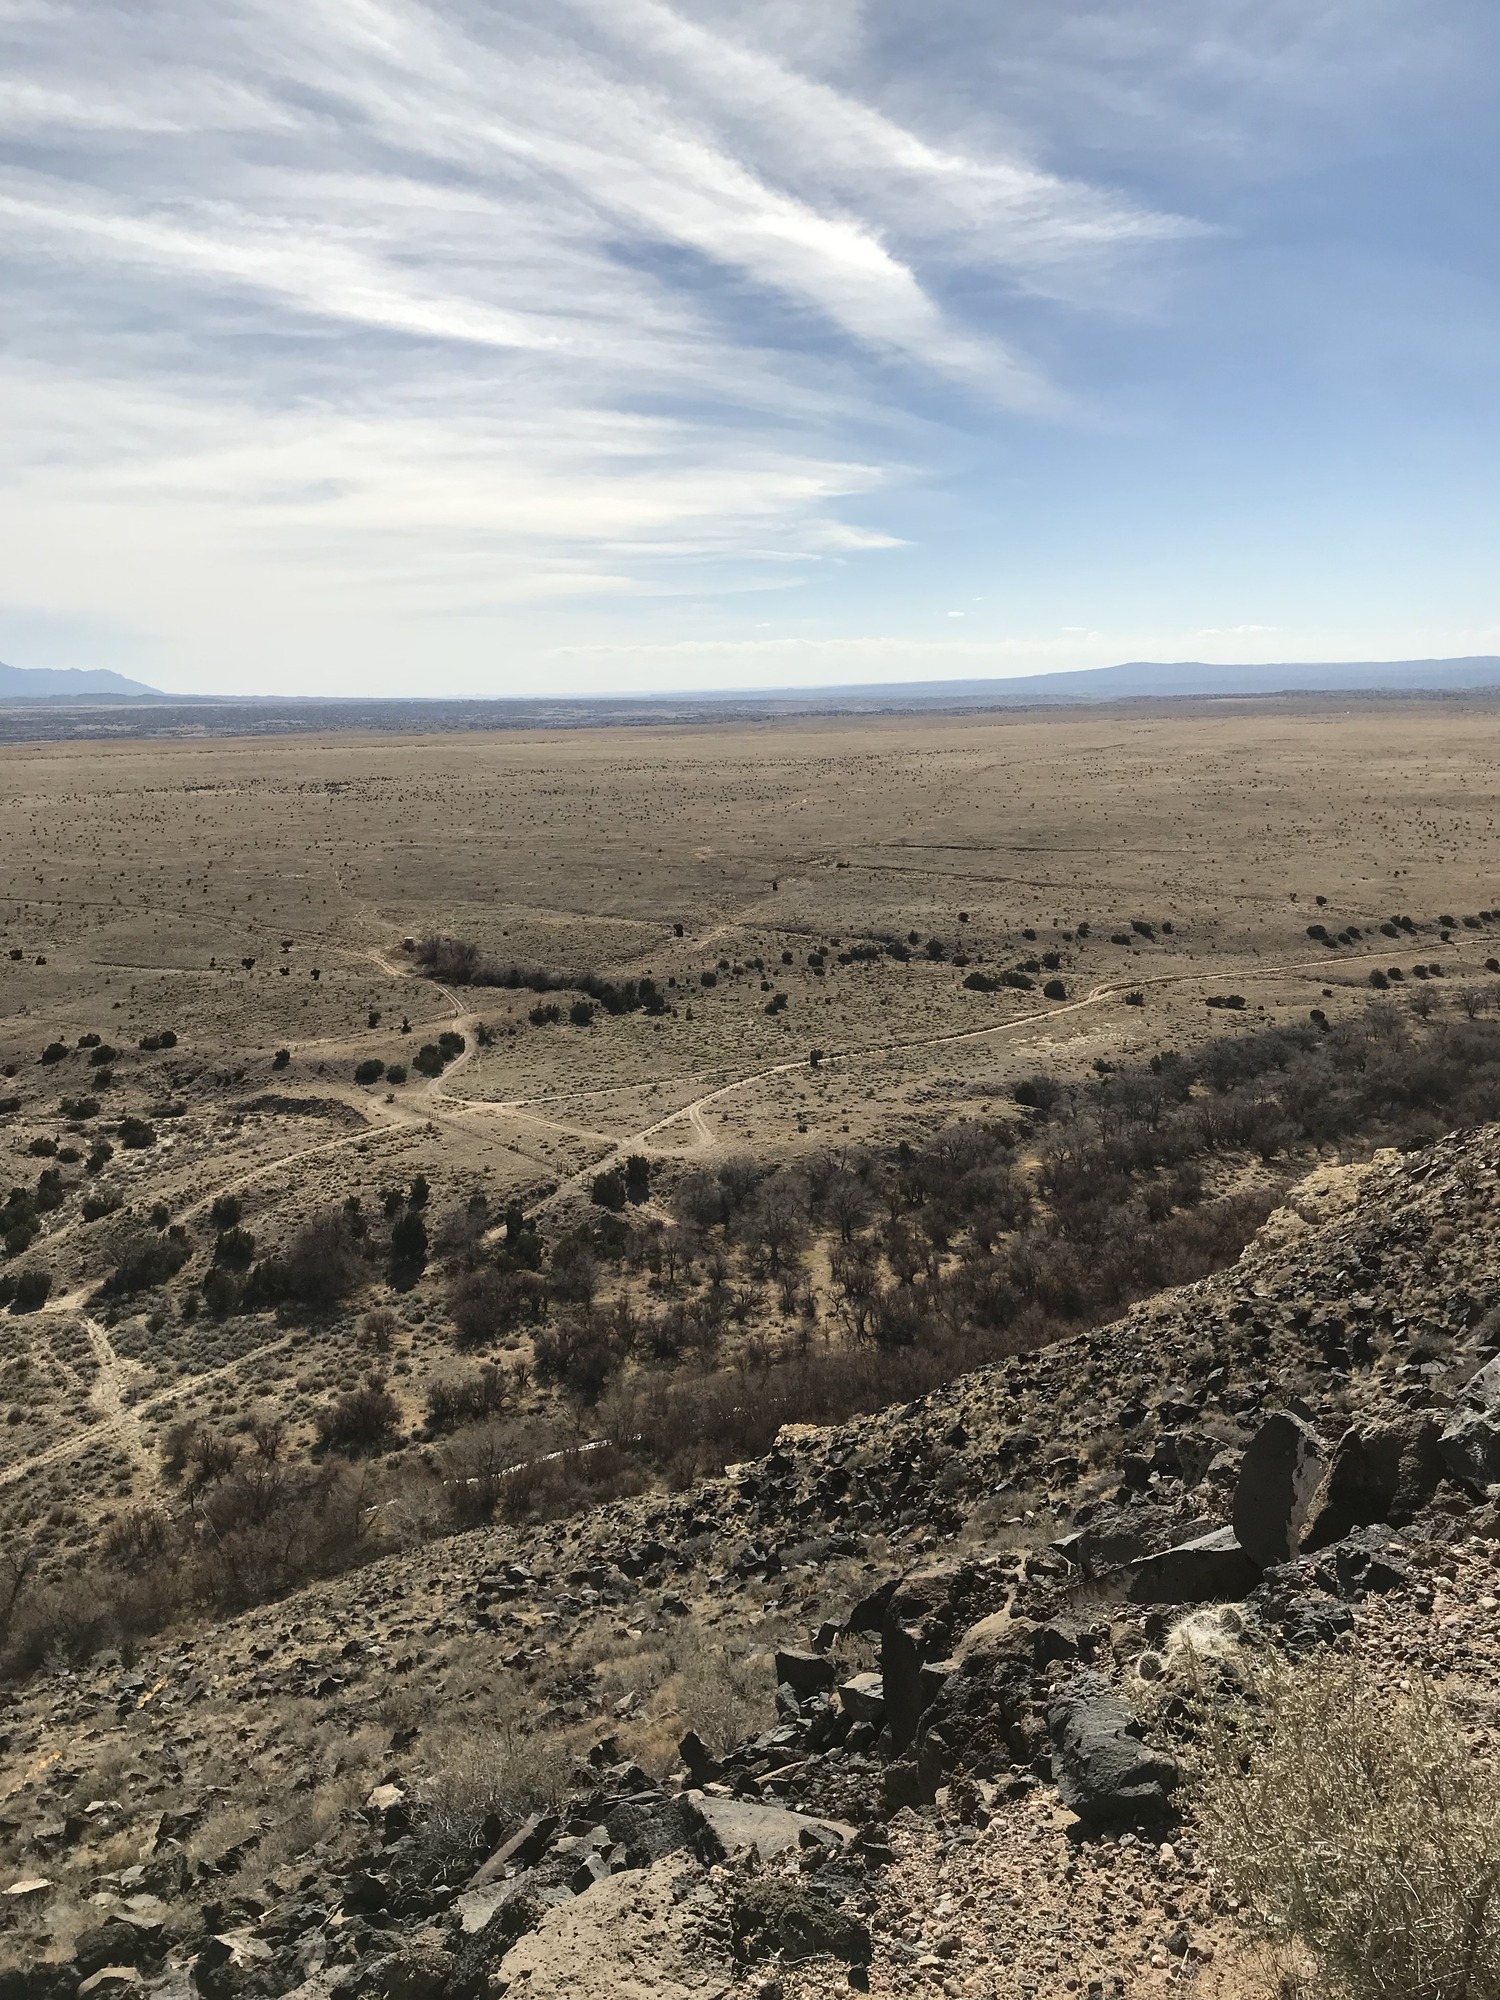 La Bajada Mesa's breathtaking views of the plains below near Santa Fe, NM